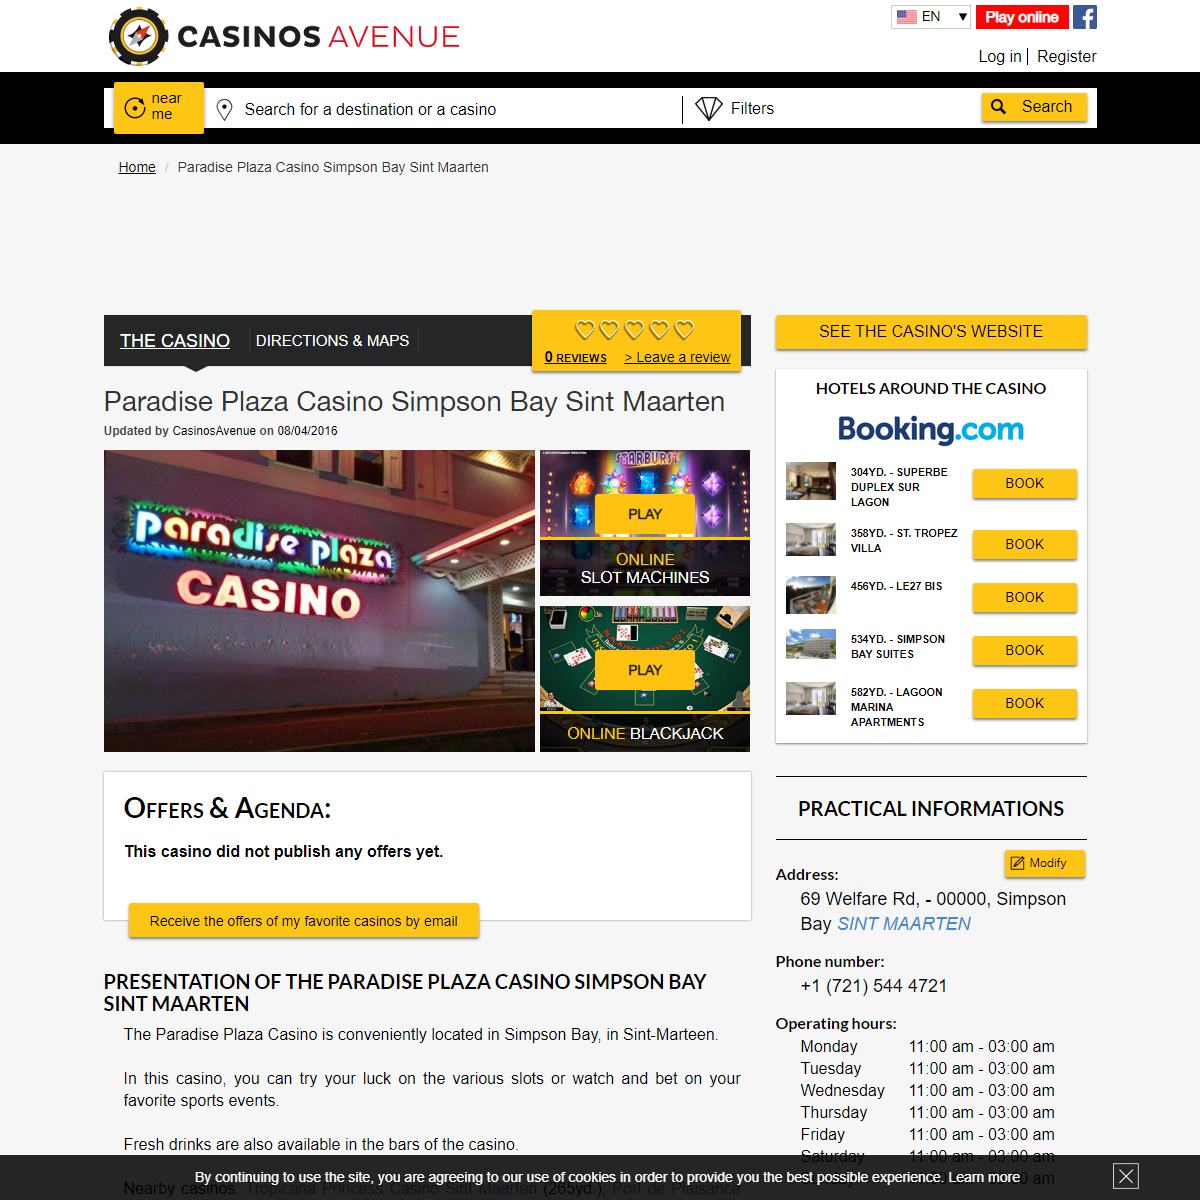 A complete backup of https://www.casinosavenue.com/en/casino/paradise-plaza-casino-simpson-bay-sint-maarten/7716